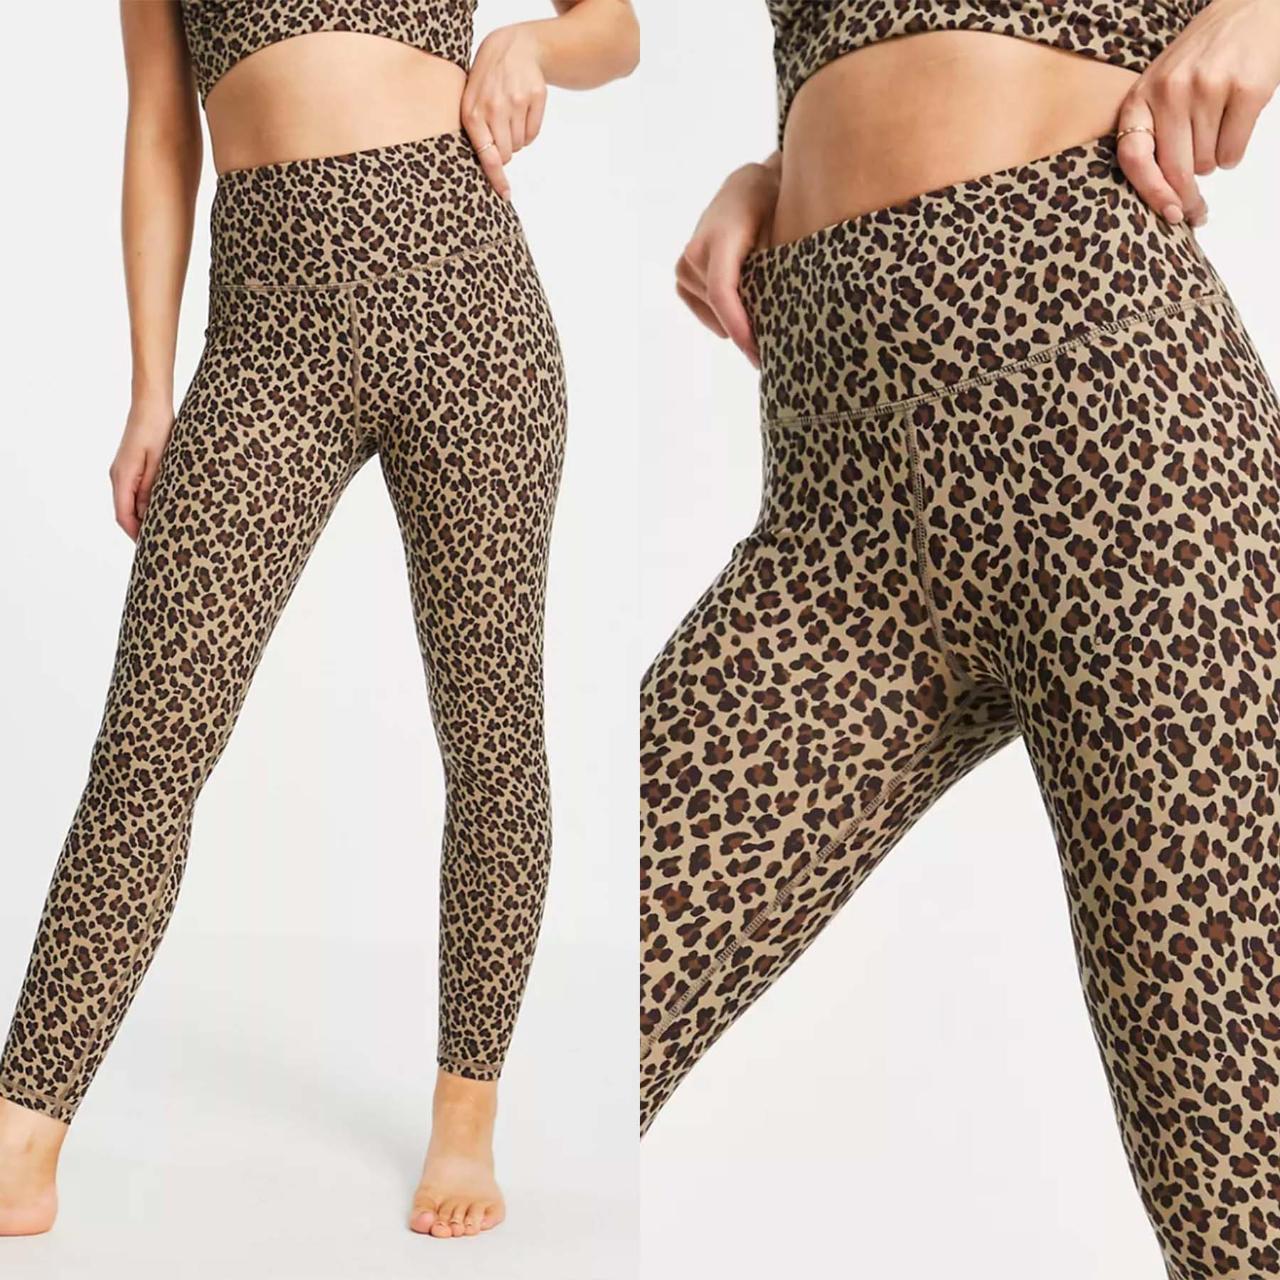 Varley Century leopard print workout leggings. - Depop